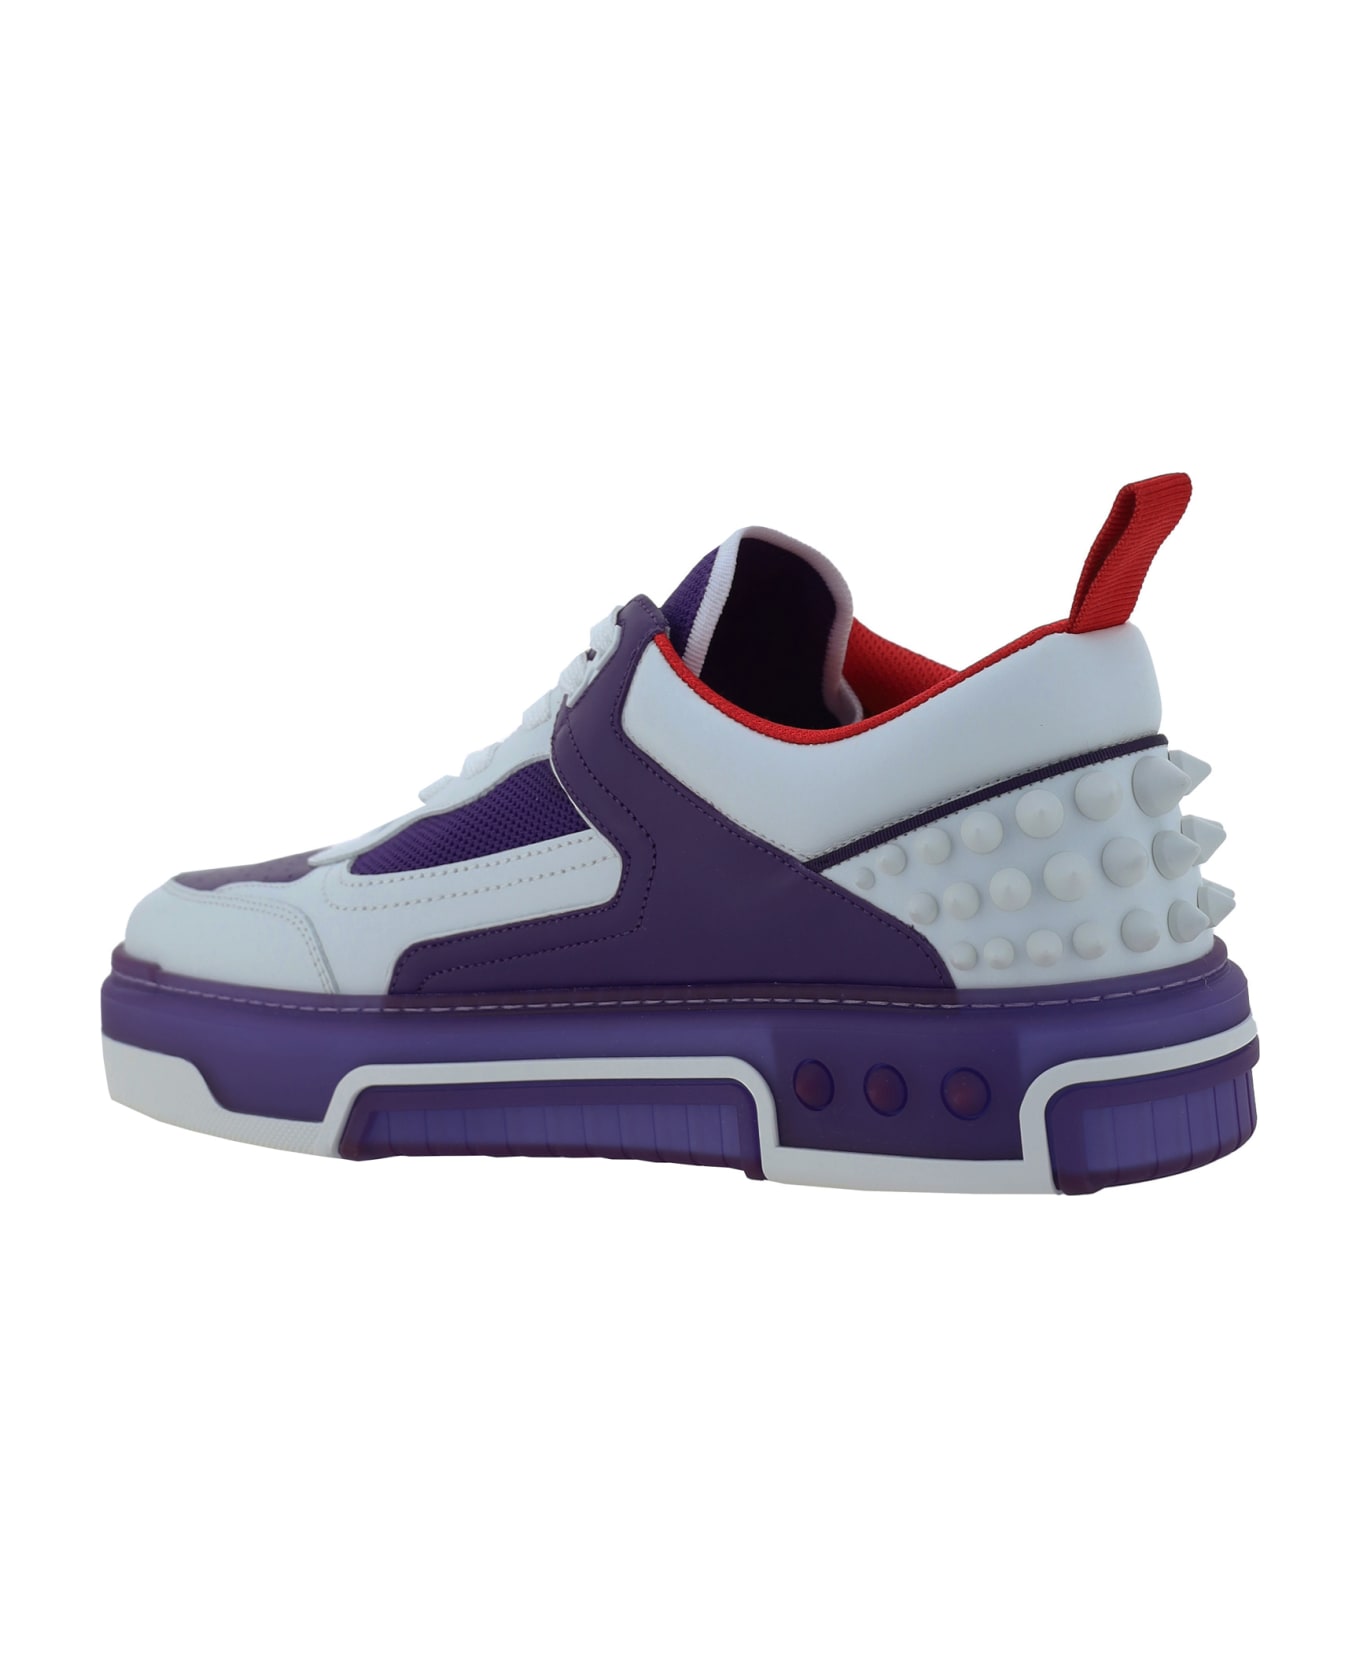 Christian Louboutin Astroloubi Sneakers - White/jacaranda スニーカー